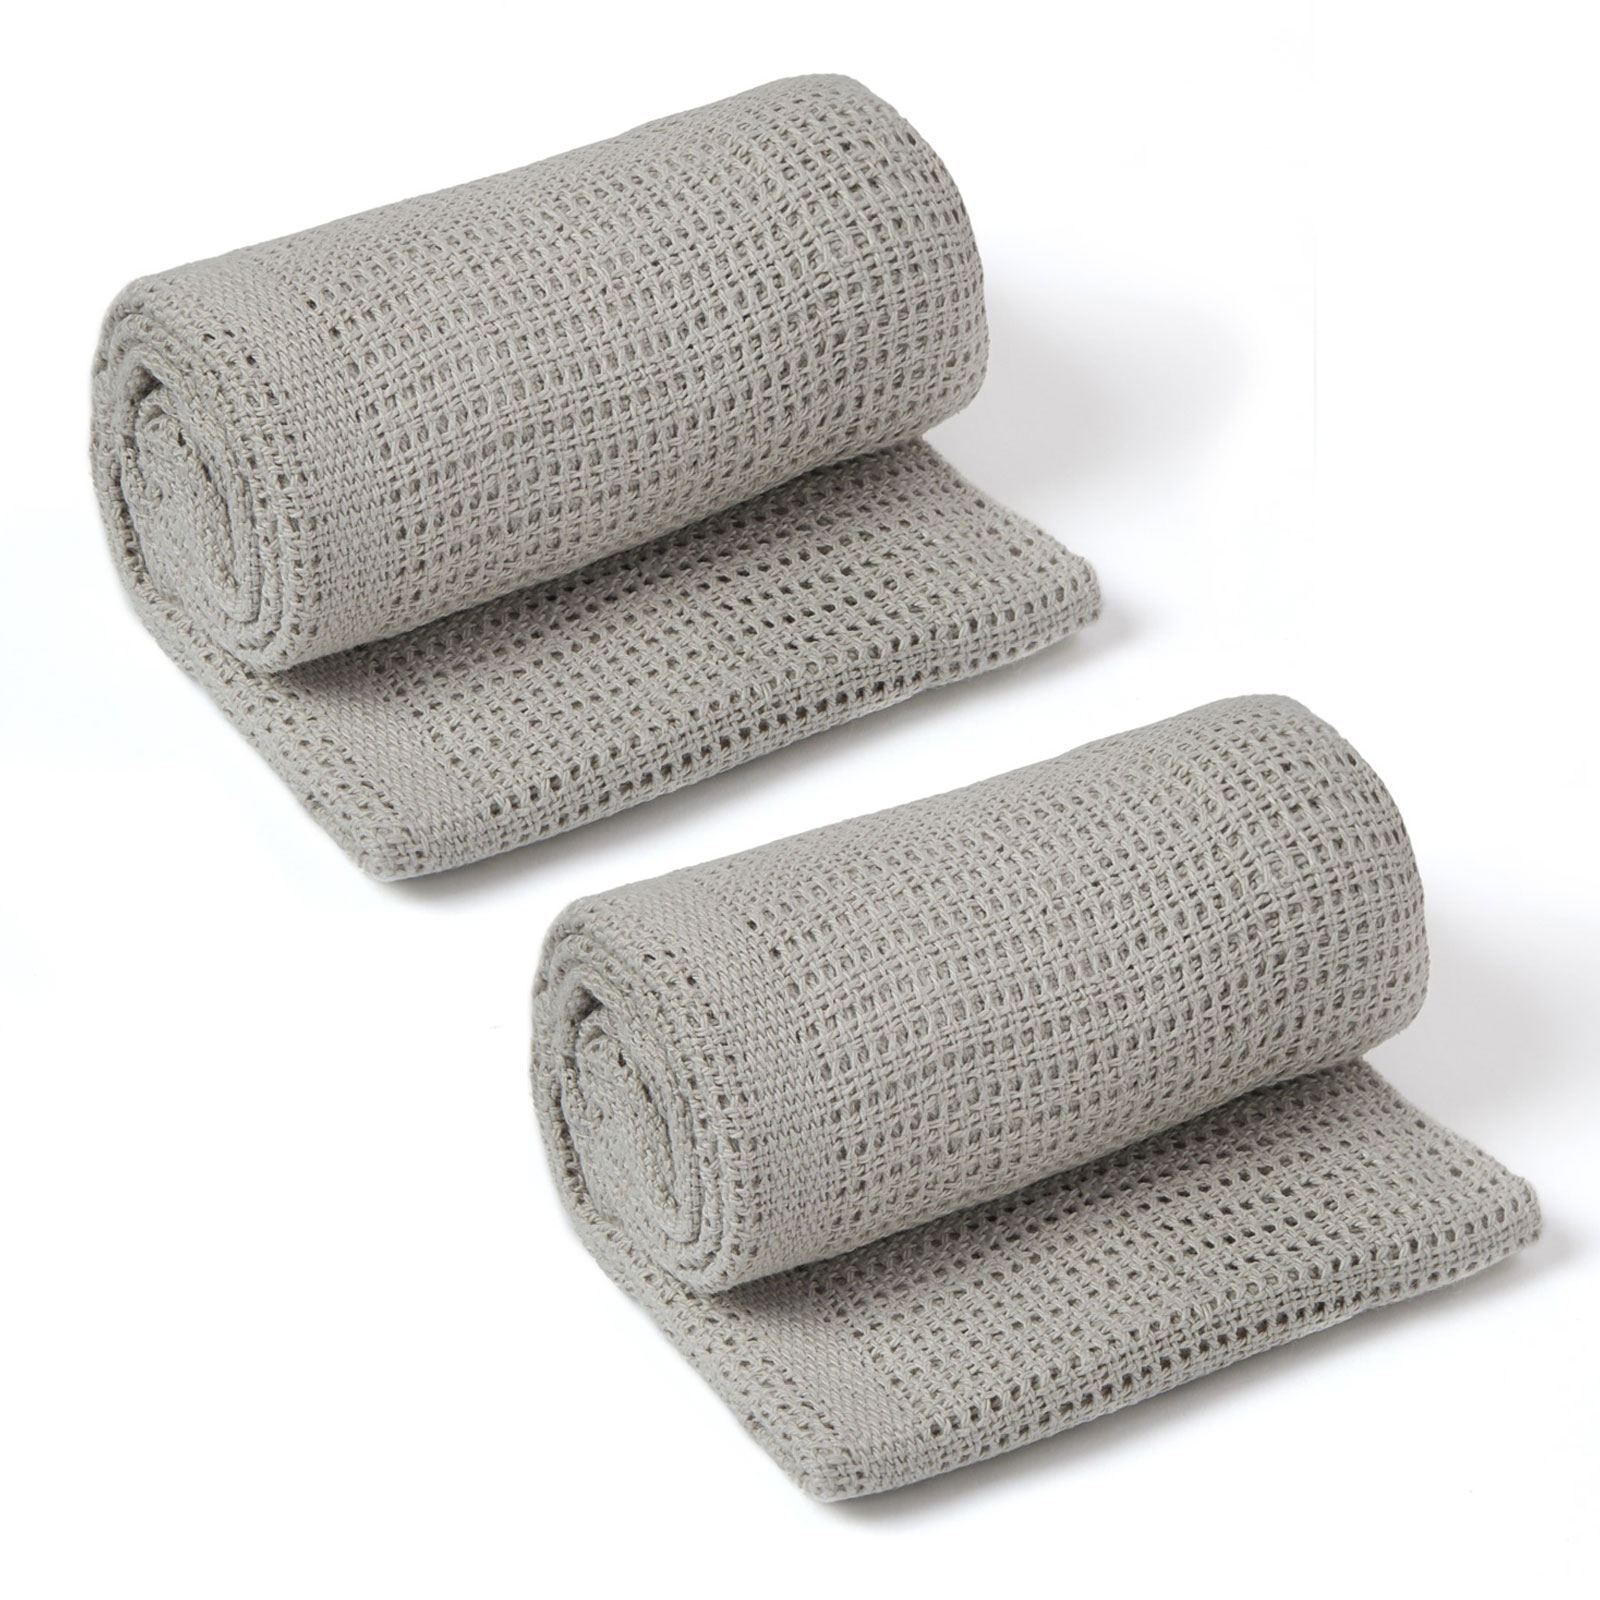 Soft Cotton Cellular Cot / Cotbed Blanket (2 Pack) - Grey